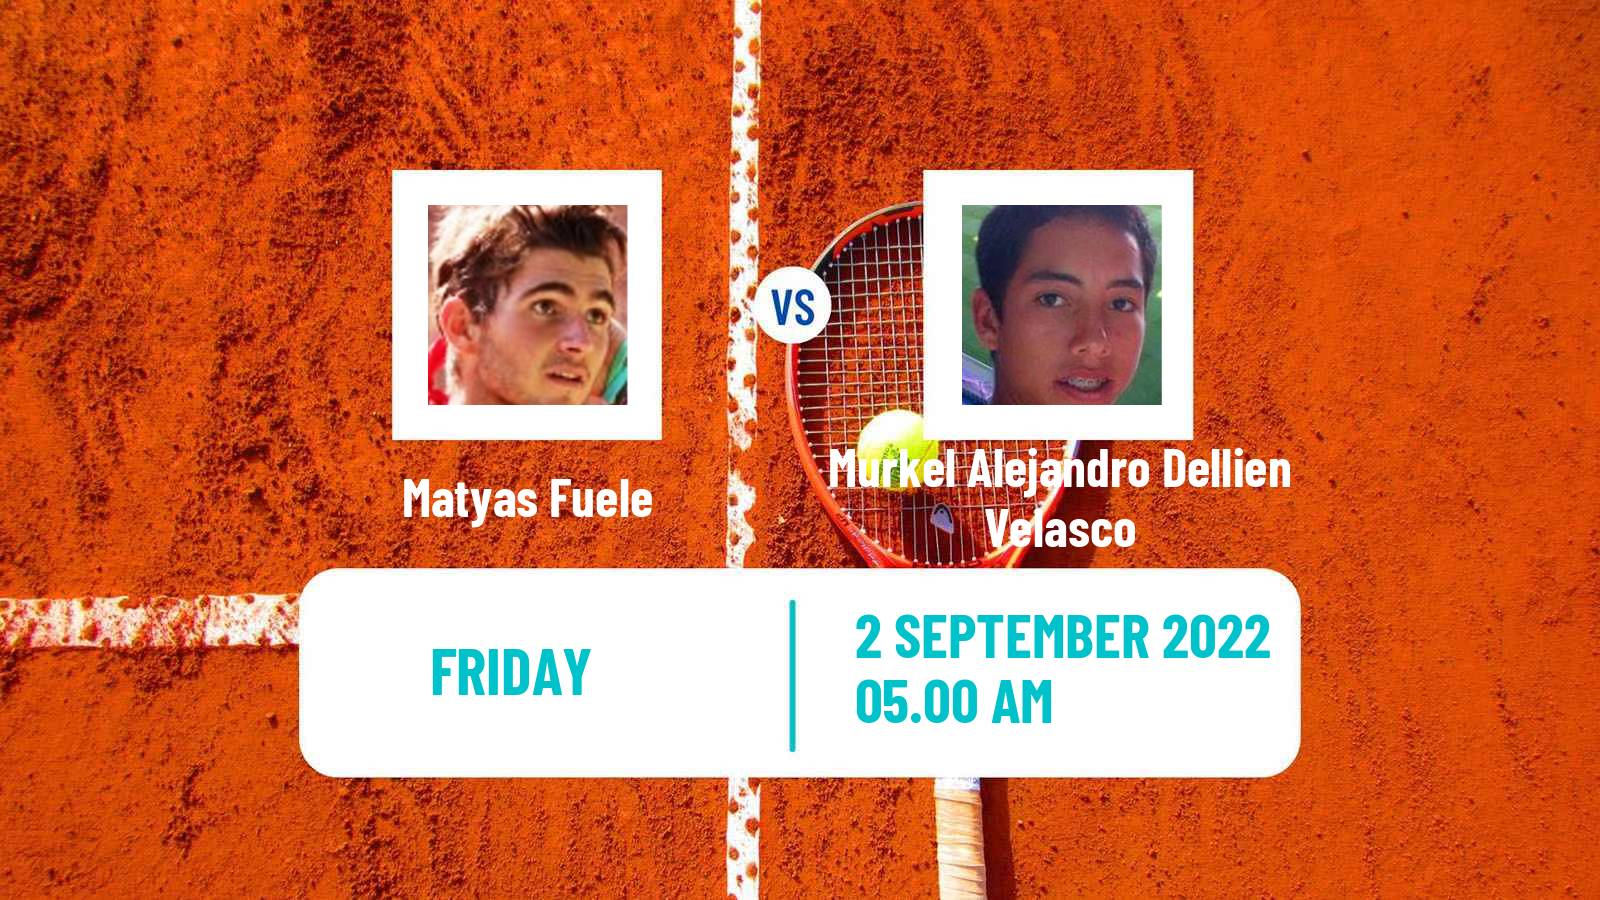 Tennis ITF Tournaments Matyas Fuele - Murkel Alejandro Dellien Velasco